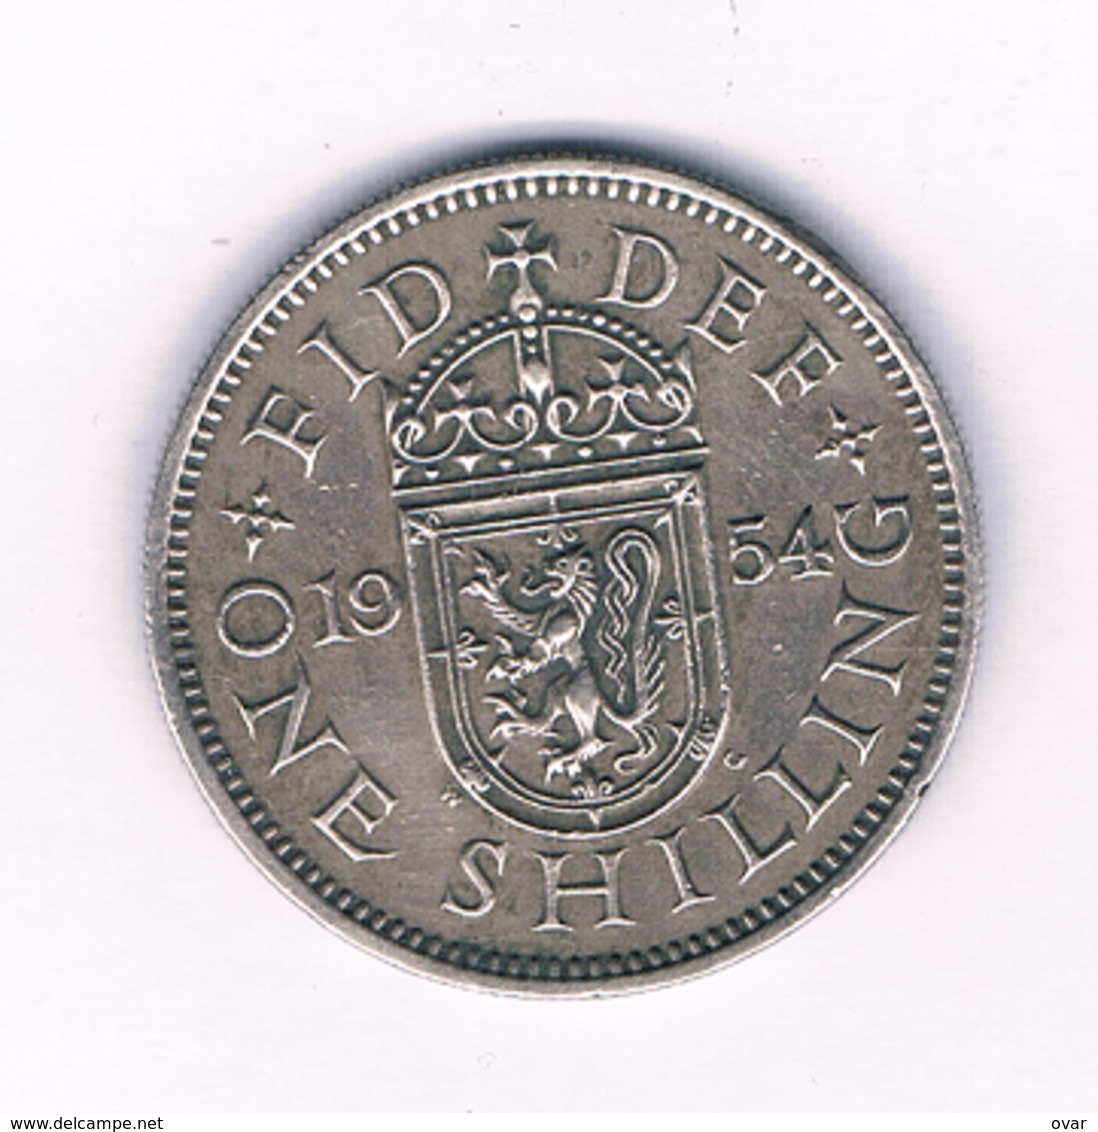 1 SHILLING 1954 (scotland) GROOT BRITANNIE /1620/ - I. 1 Shilling